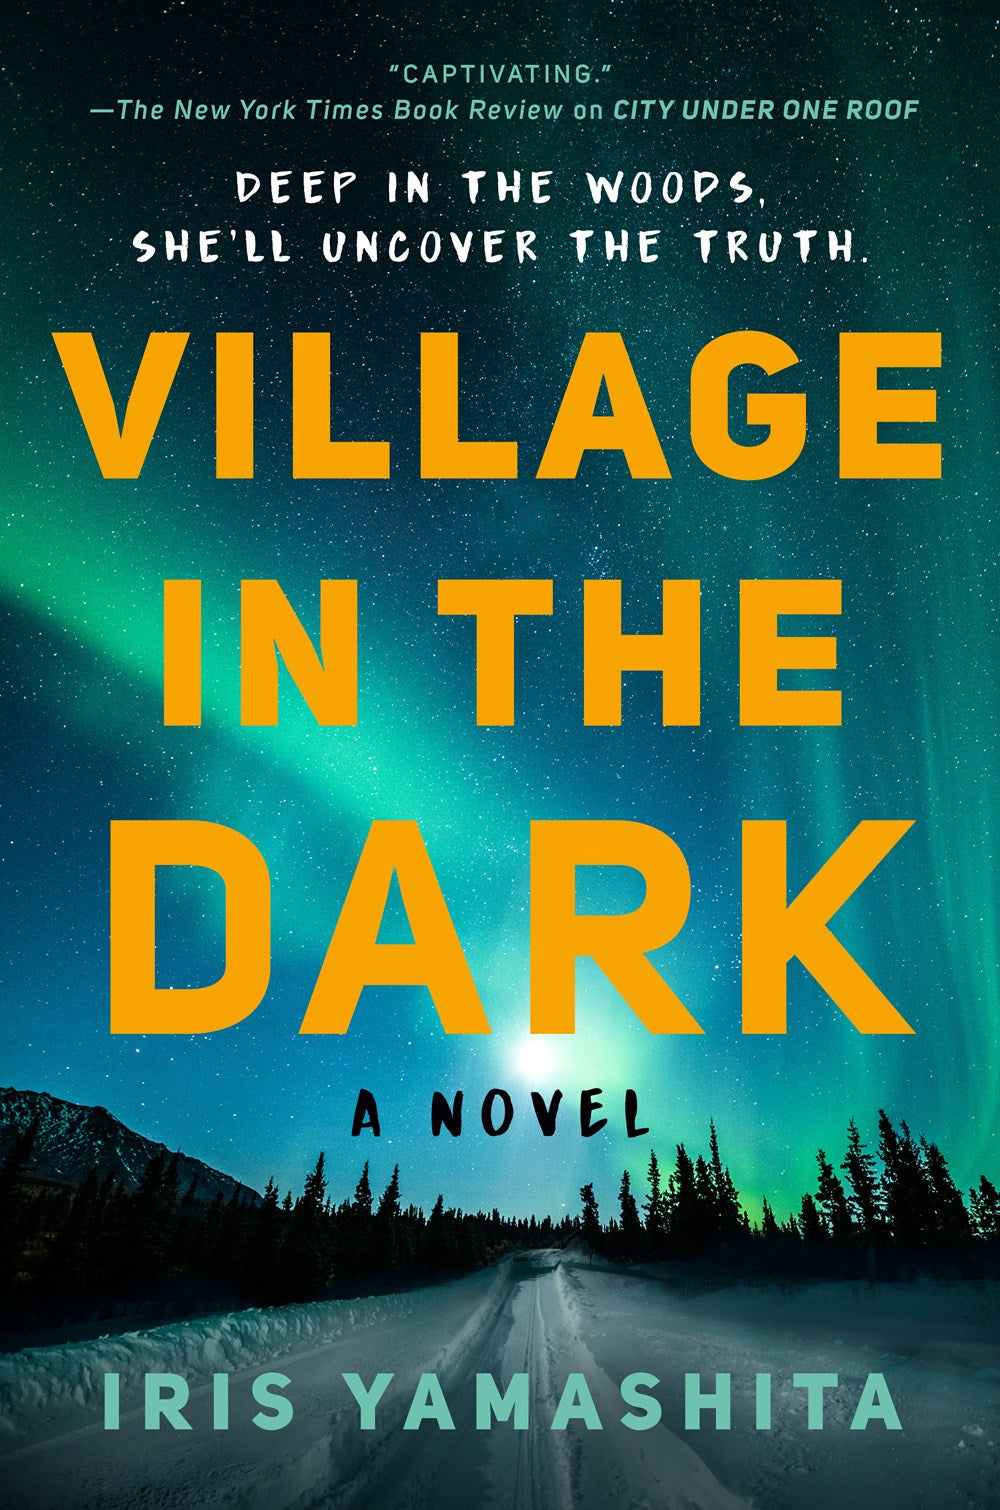 Village in the Dark by Iris Yamashita (Hardcover) (PREORDER)